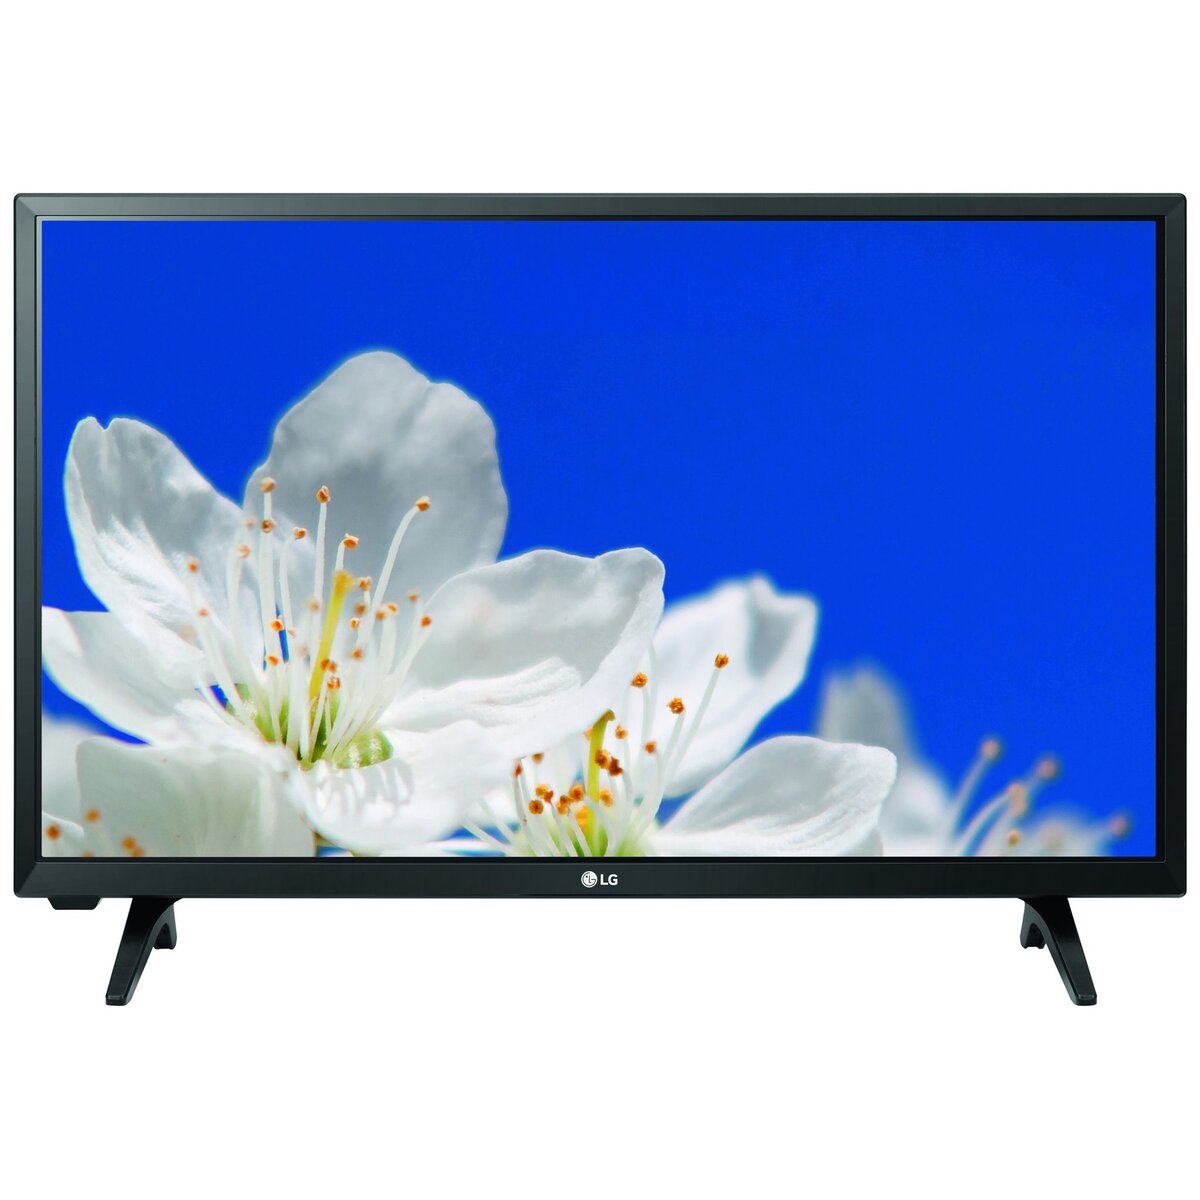 LG 28MT42VF TV LED HD Ready 70 cm